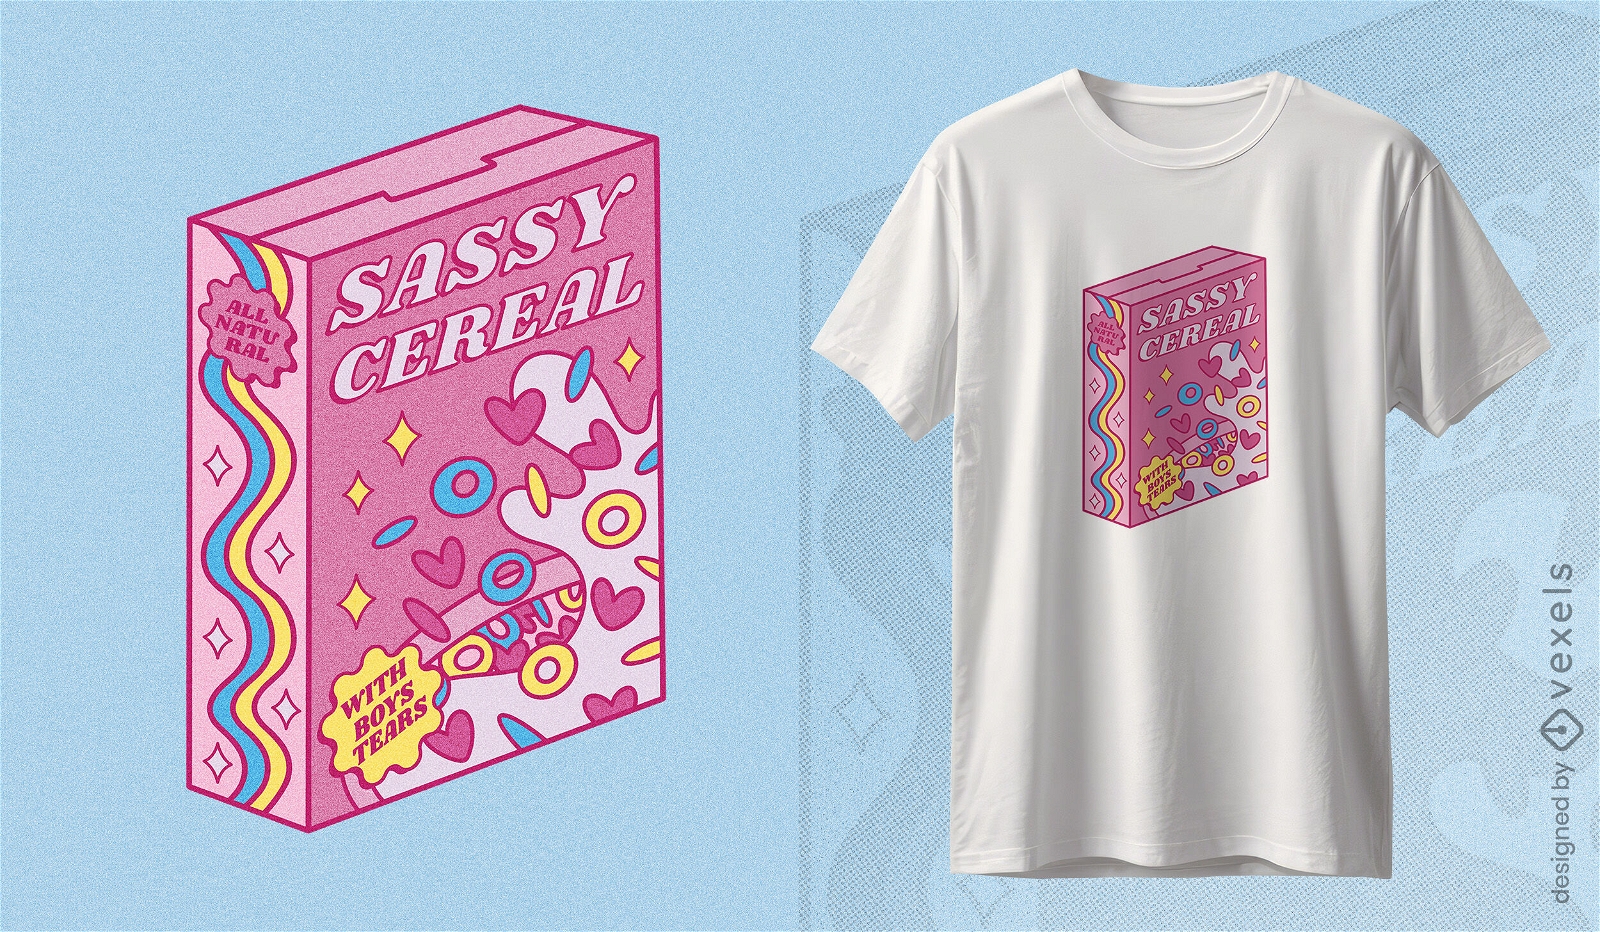 Sassy cereal box t-shirt design